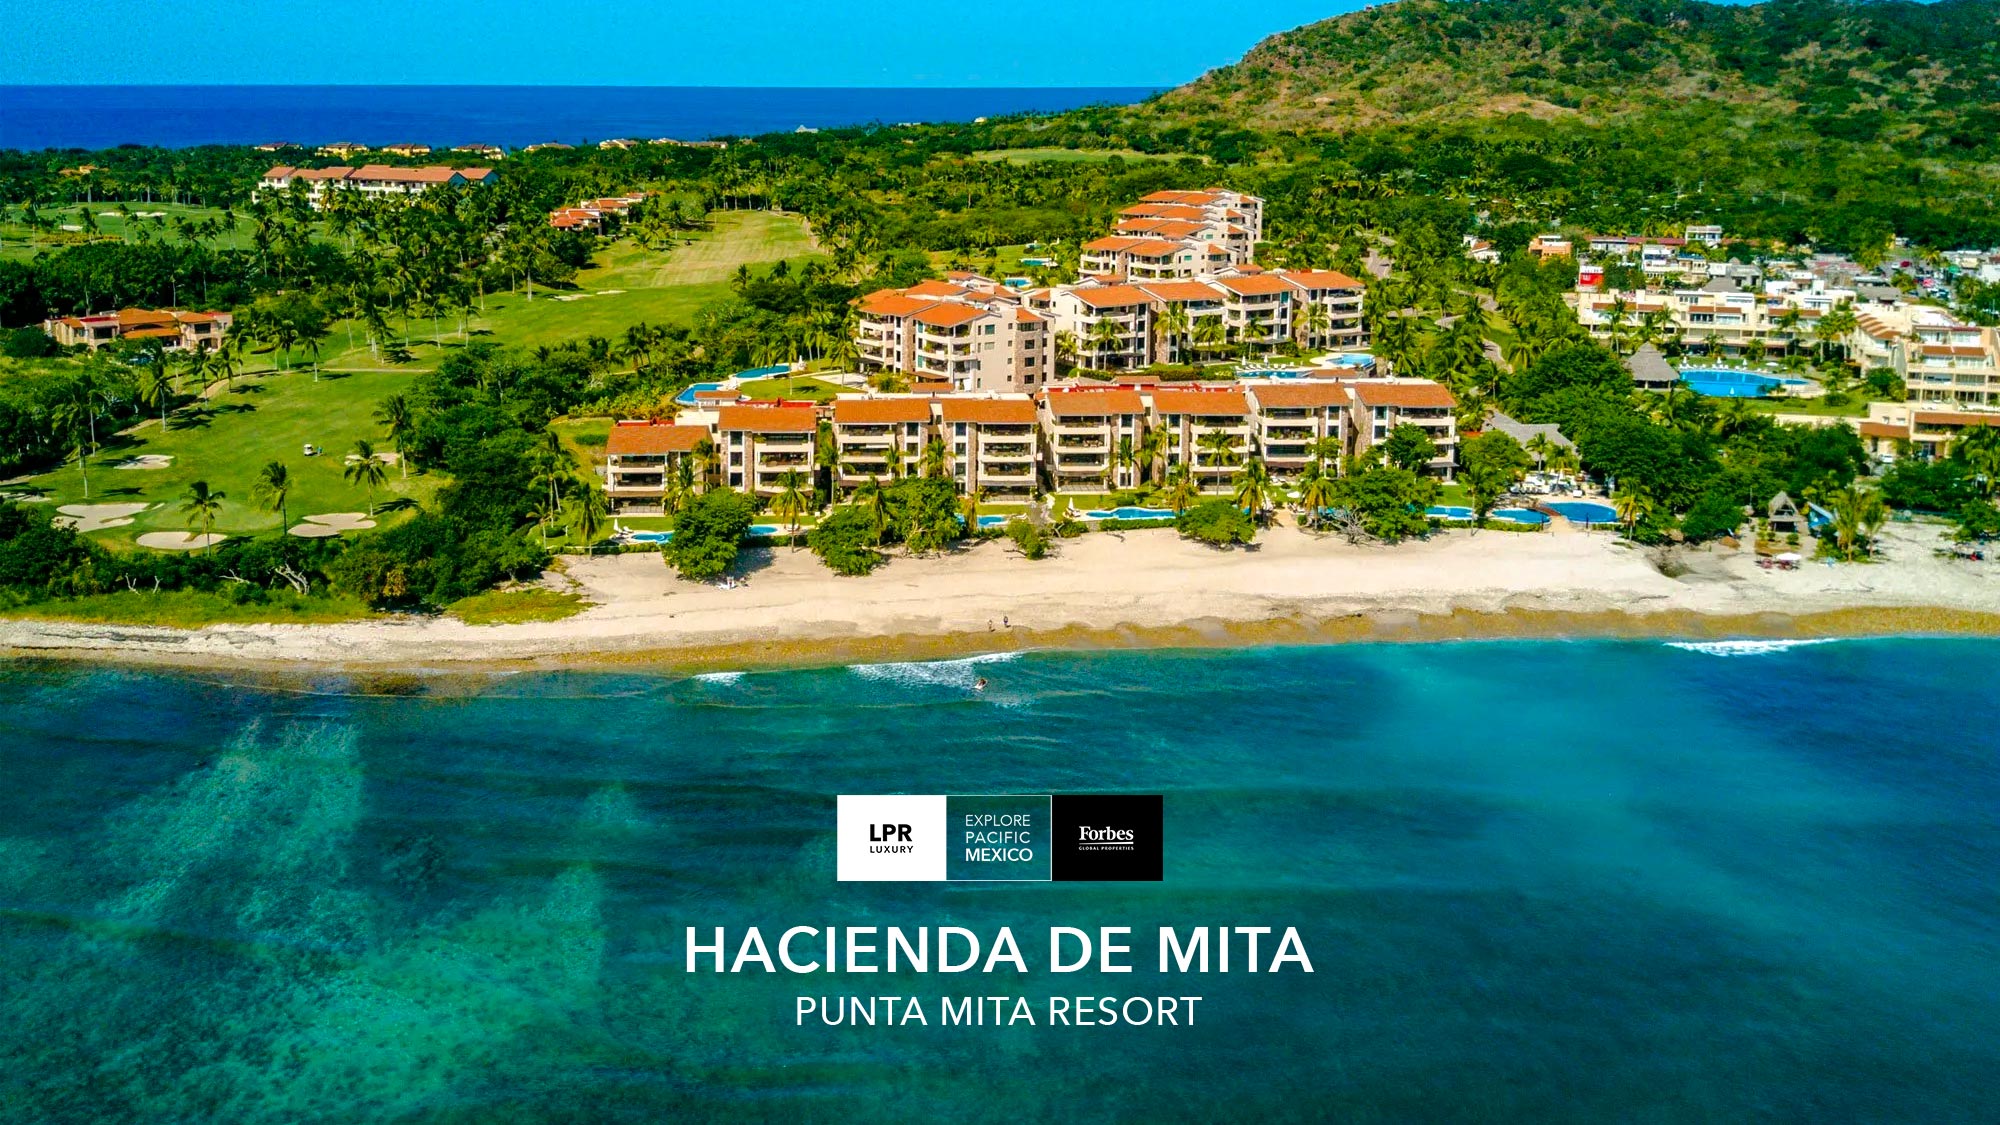 Aura Arena Blanca 401 - LPR Luxury Punta Mita Real Estate and Vacation  Rentals